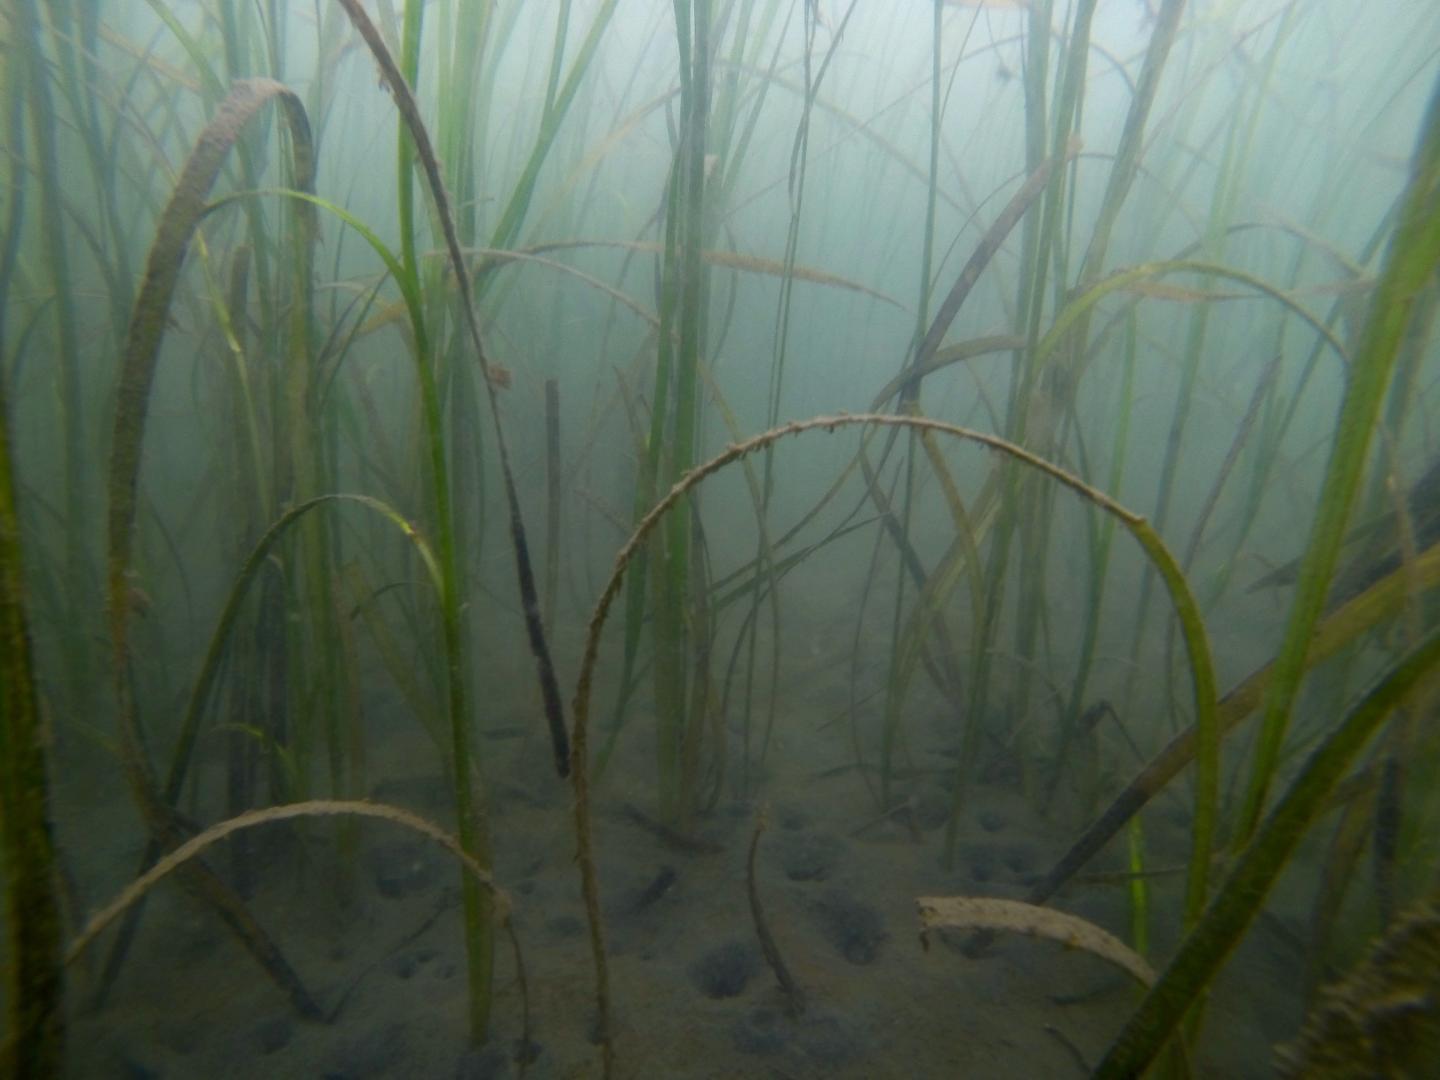 Seagrass in Puget Sound